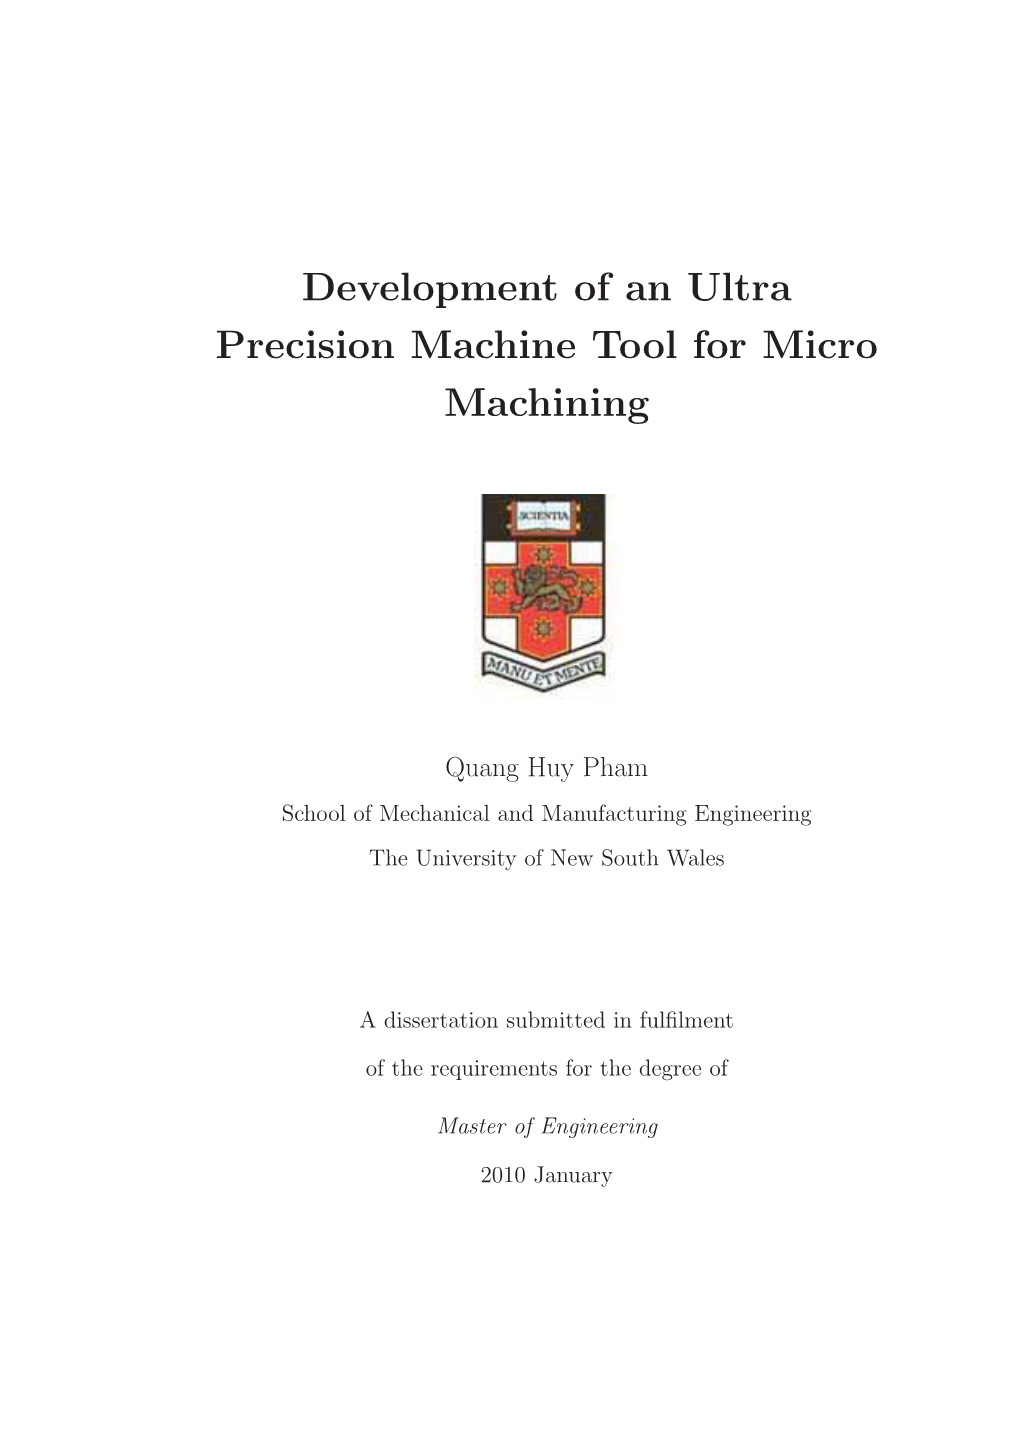 Development of an Ultra Precision Machine Tool for Micro Machining